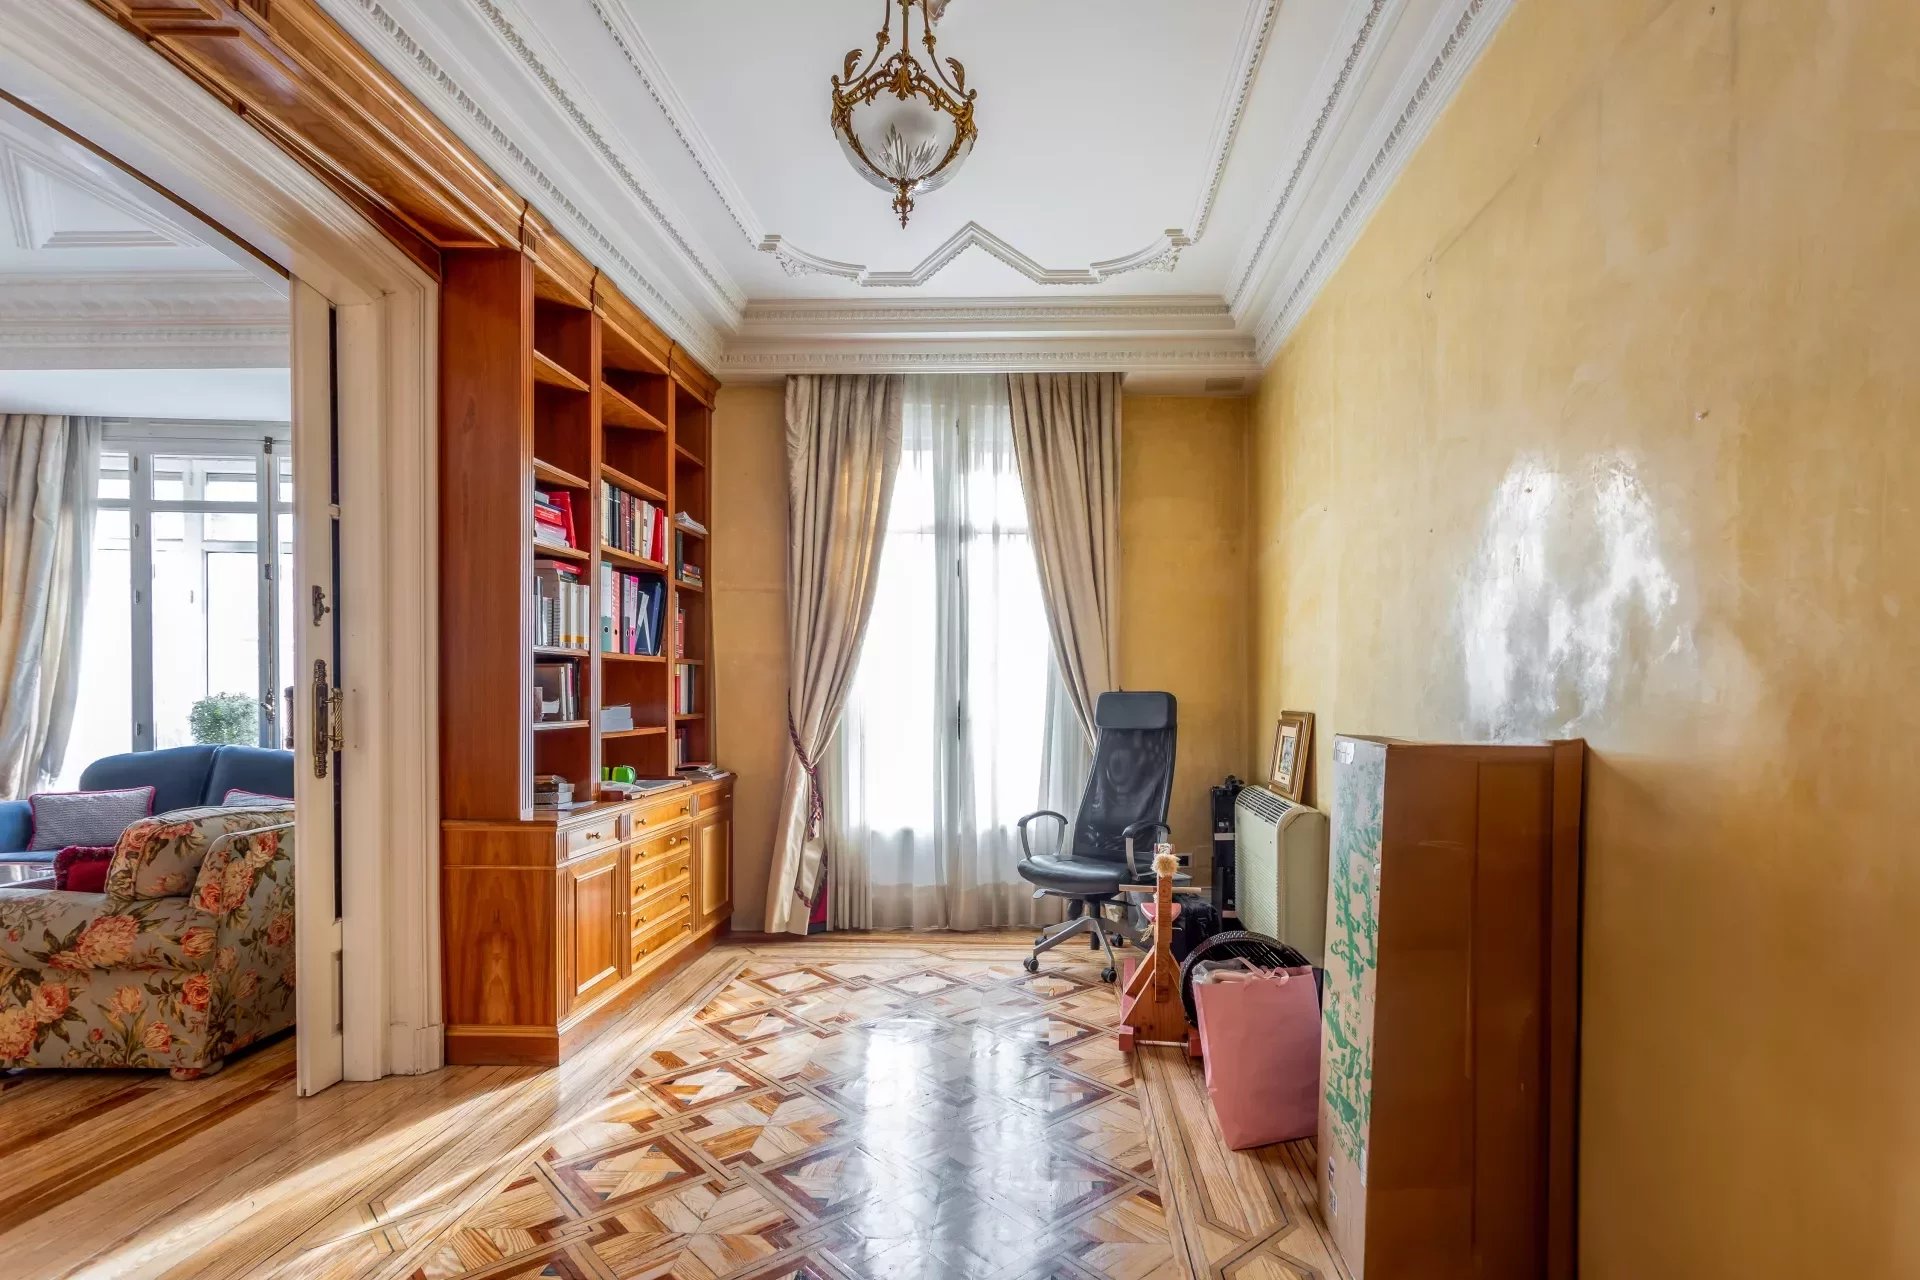 Exclusive apartment in the prestigious area of Almagro, Madrid - picture 3 title=